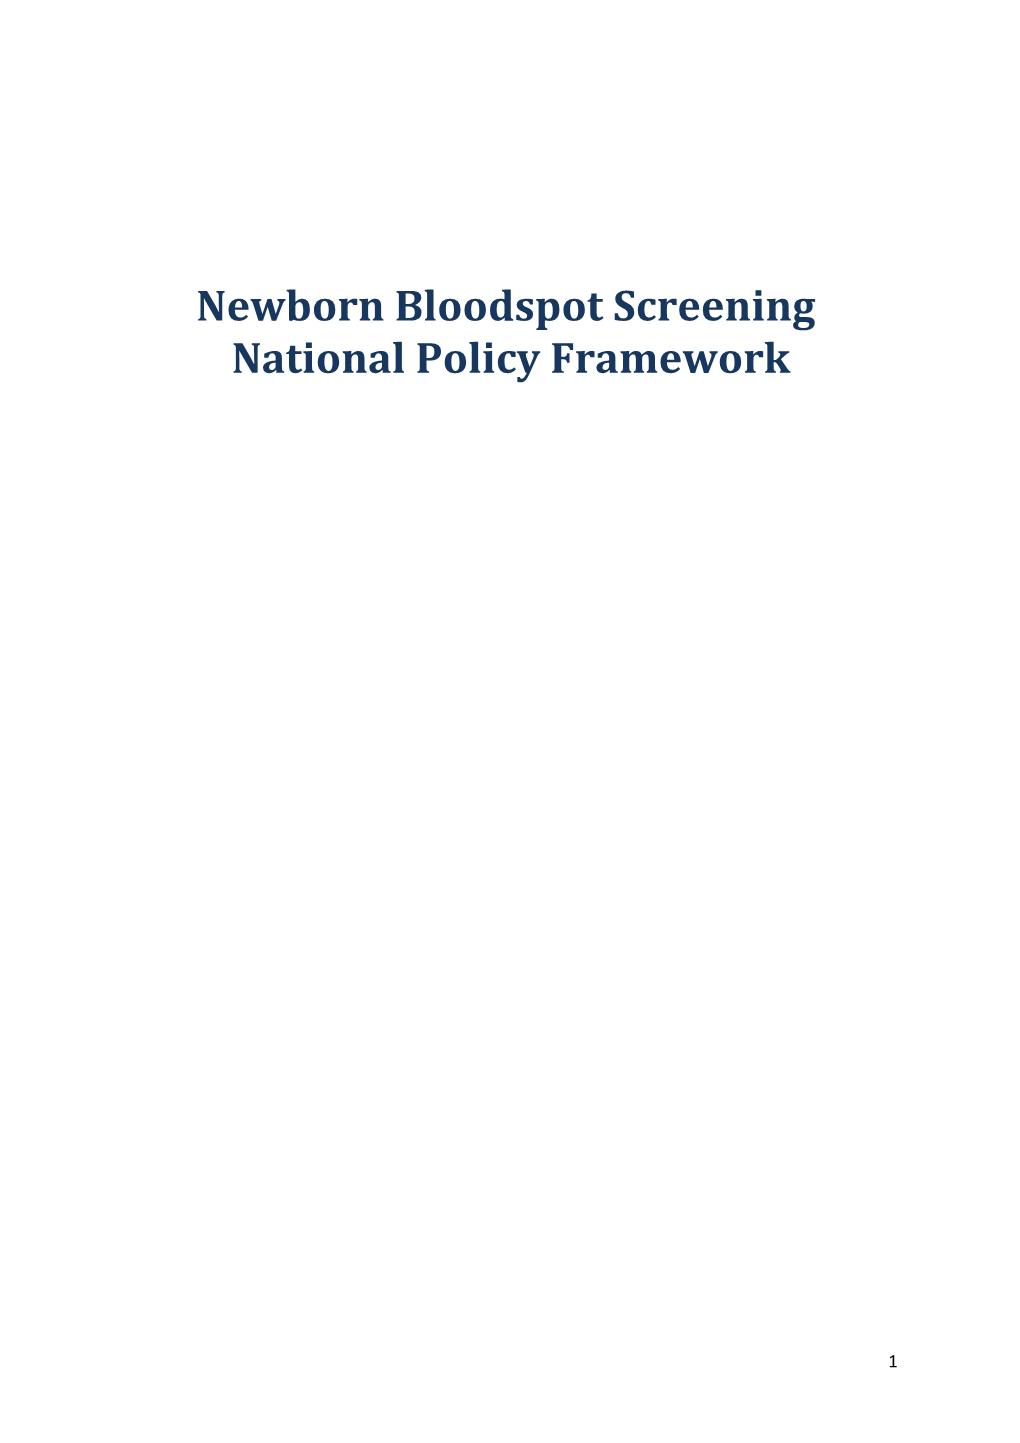 Newborn Bloodspot Screening National Policy Framework